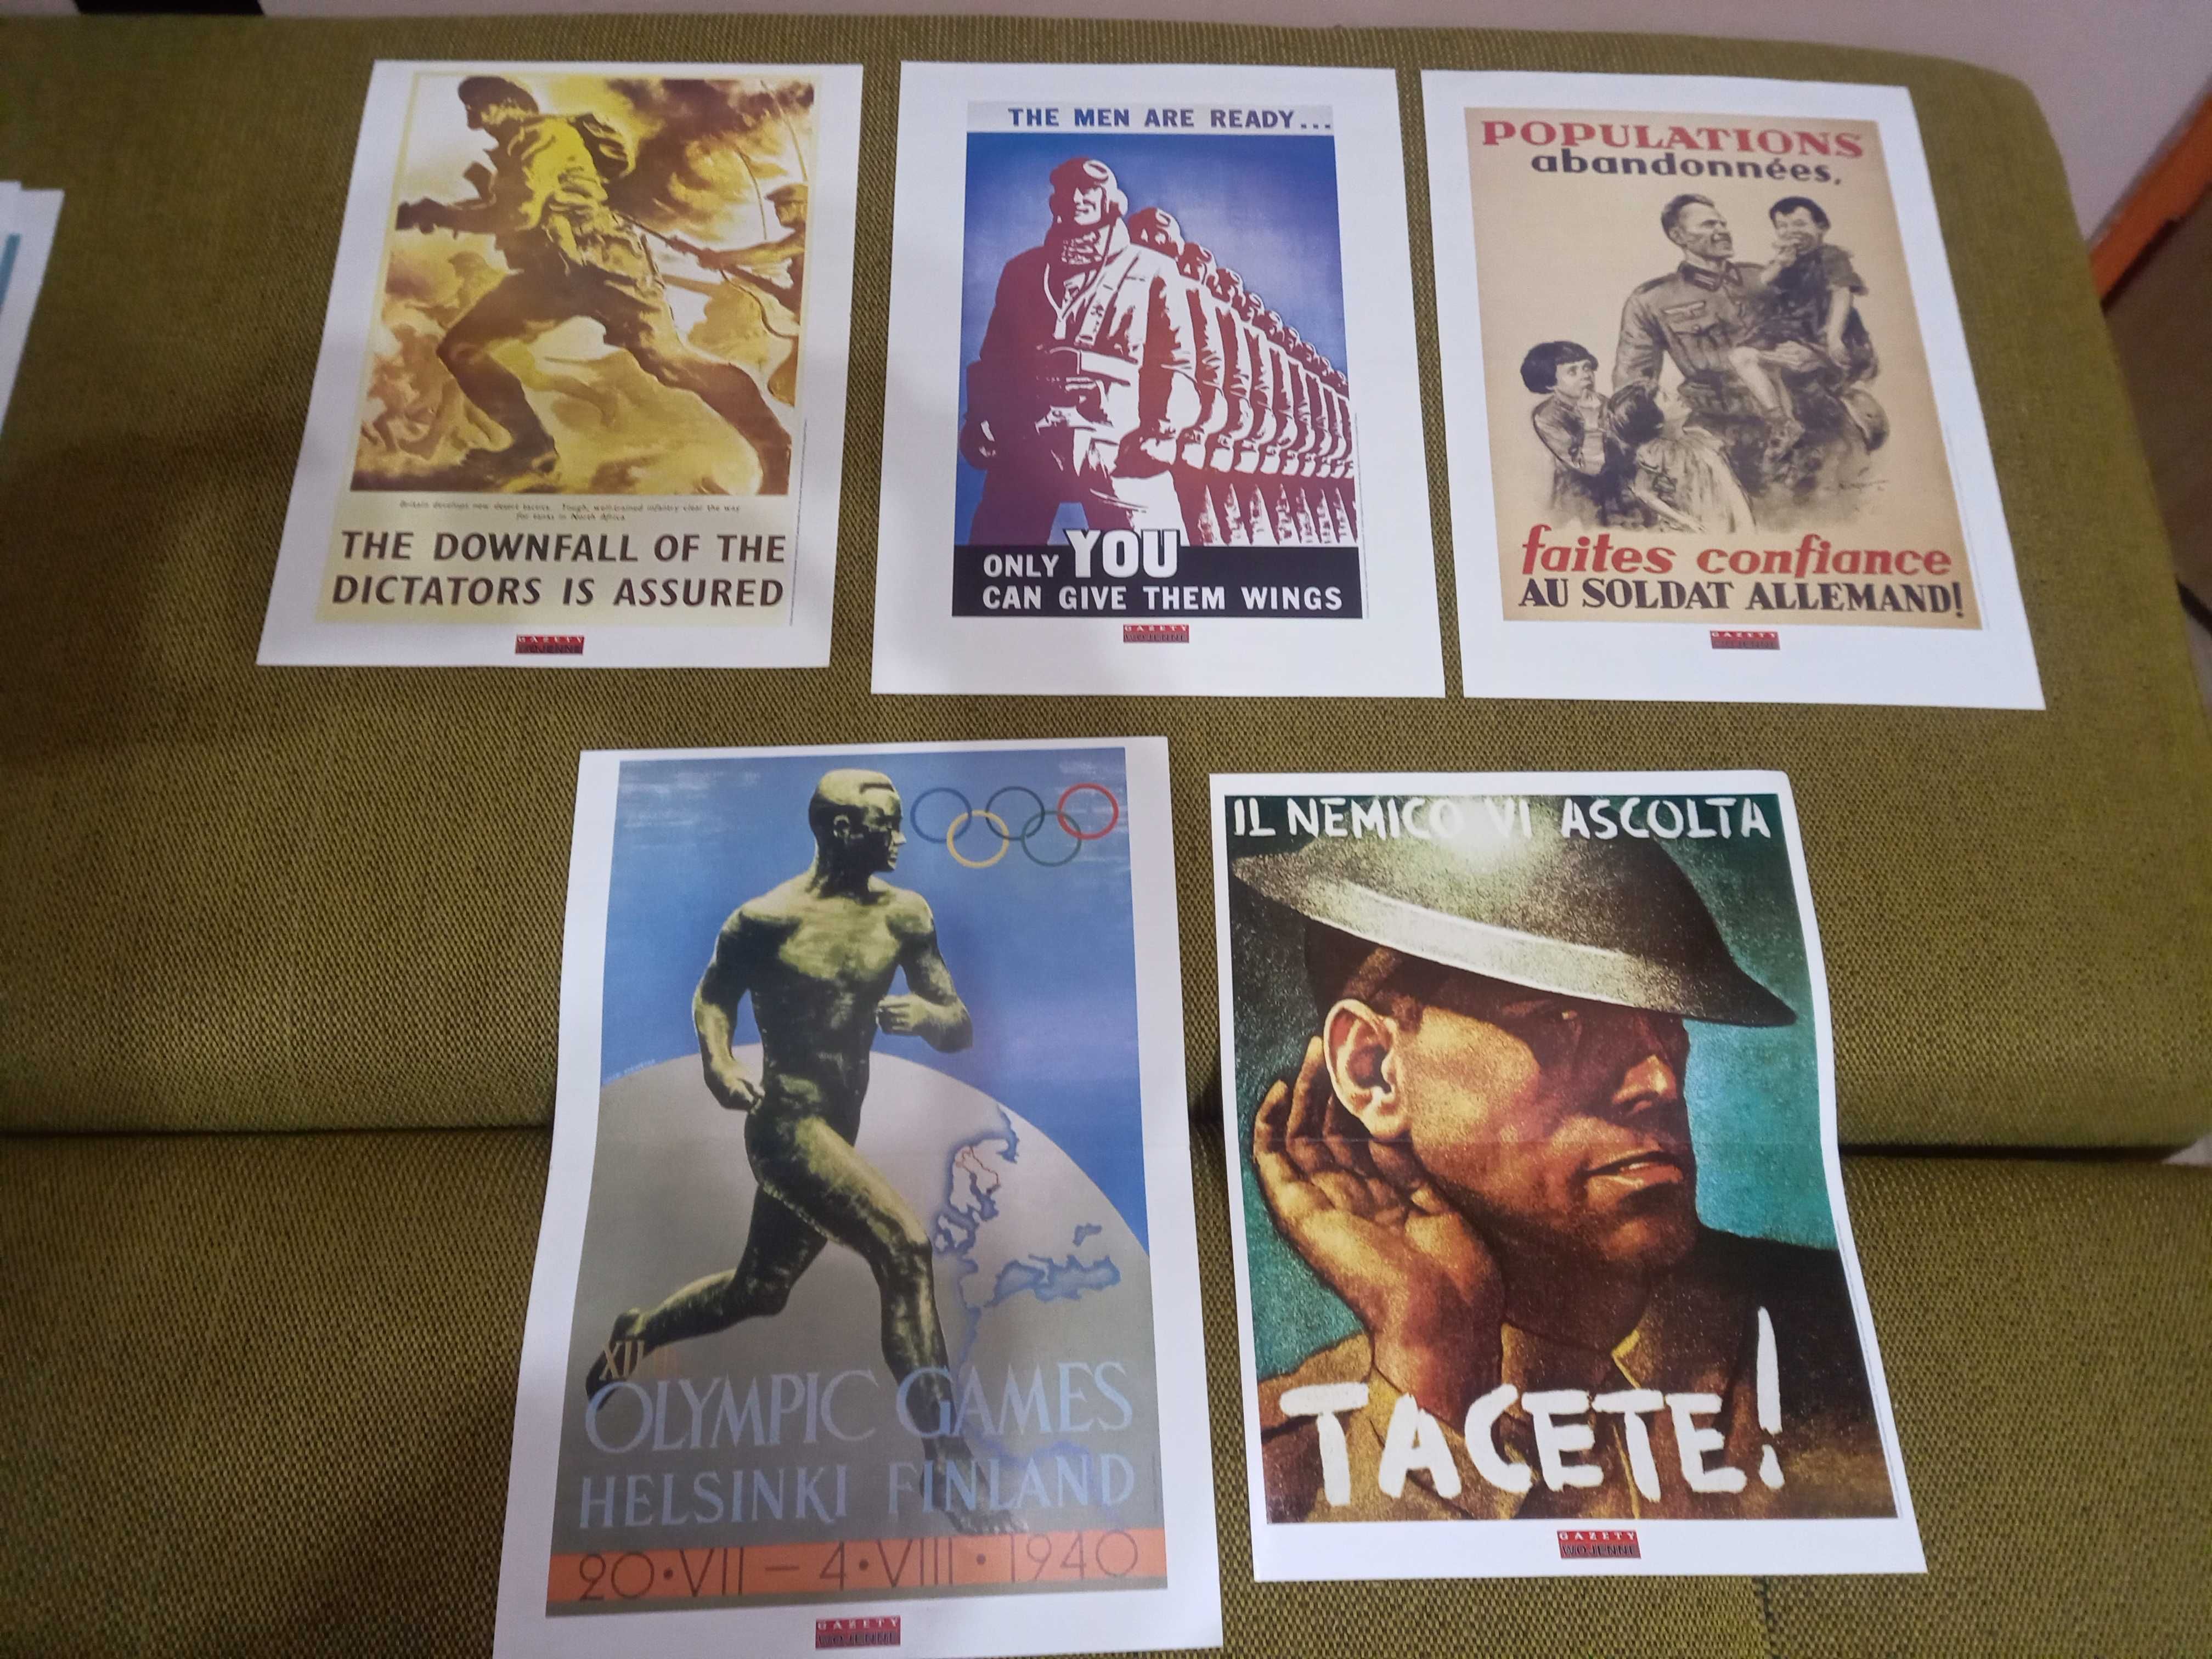 Plakaty Gazety Wojenne 5 sztuk